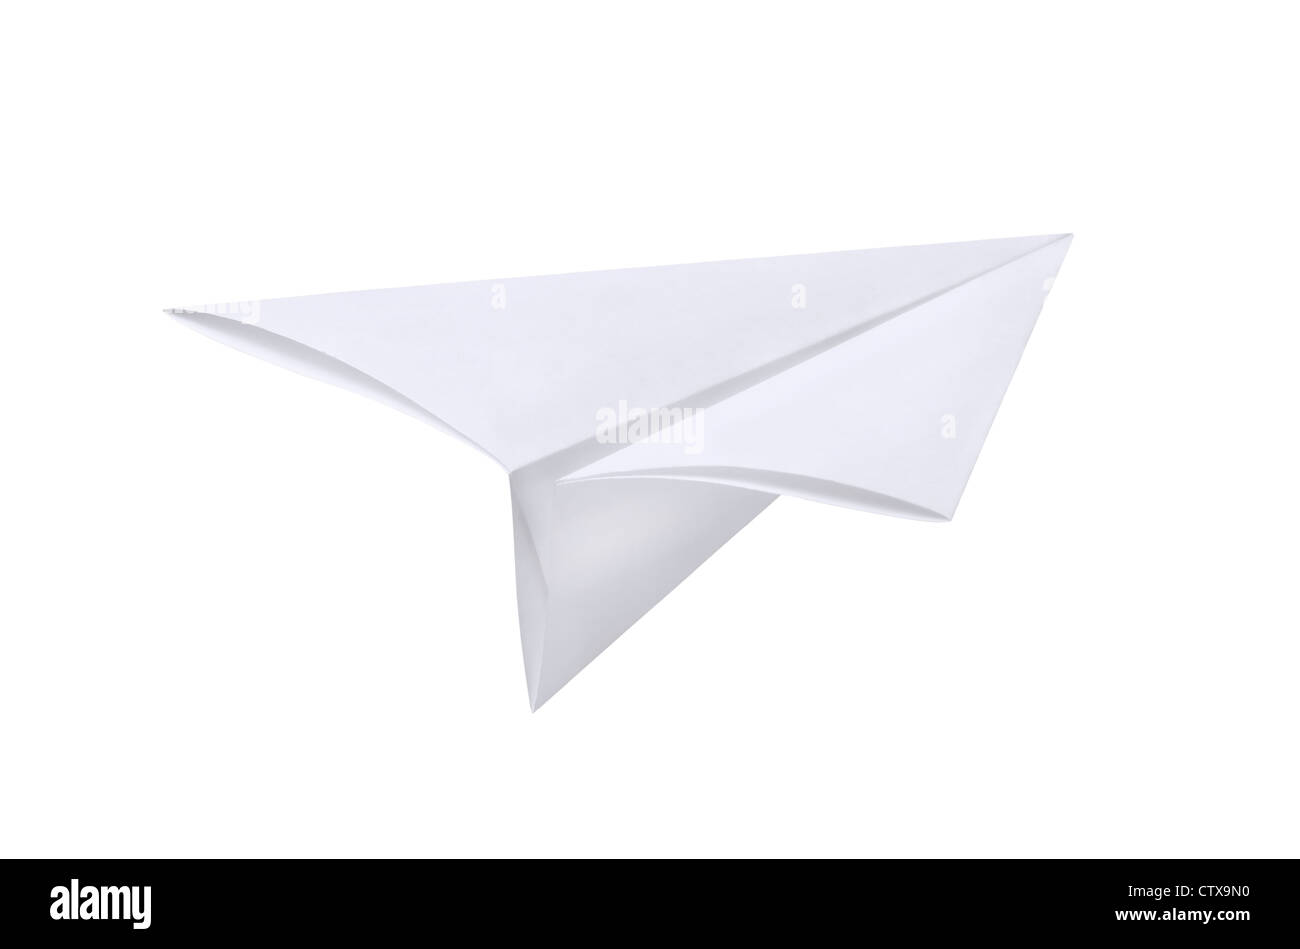 Avion en papier isolated on white Banque D'Images